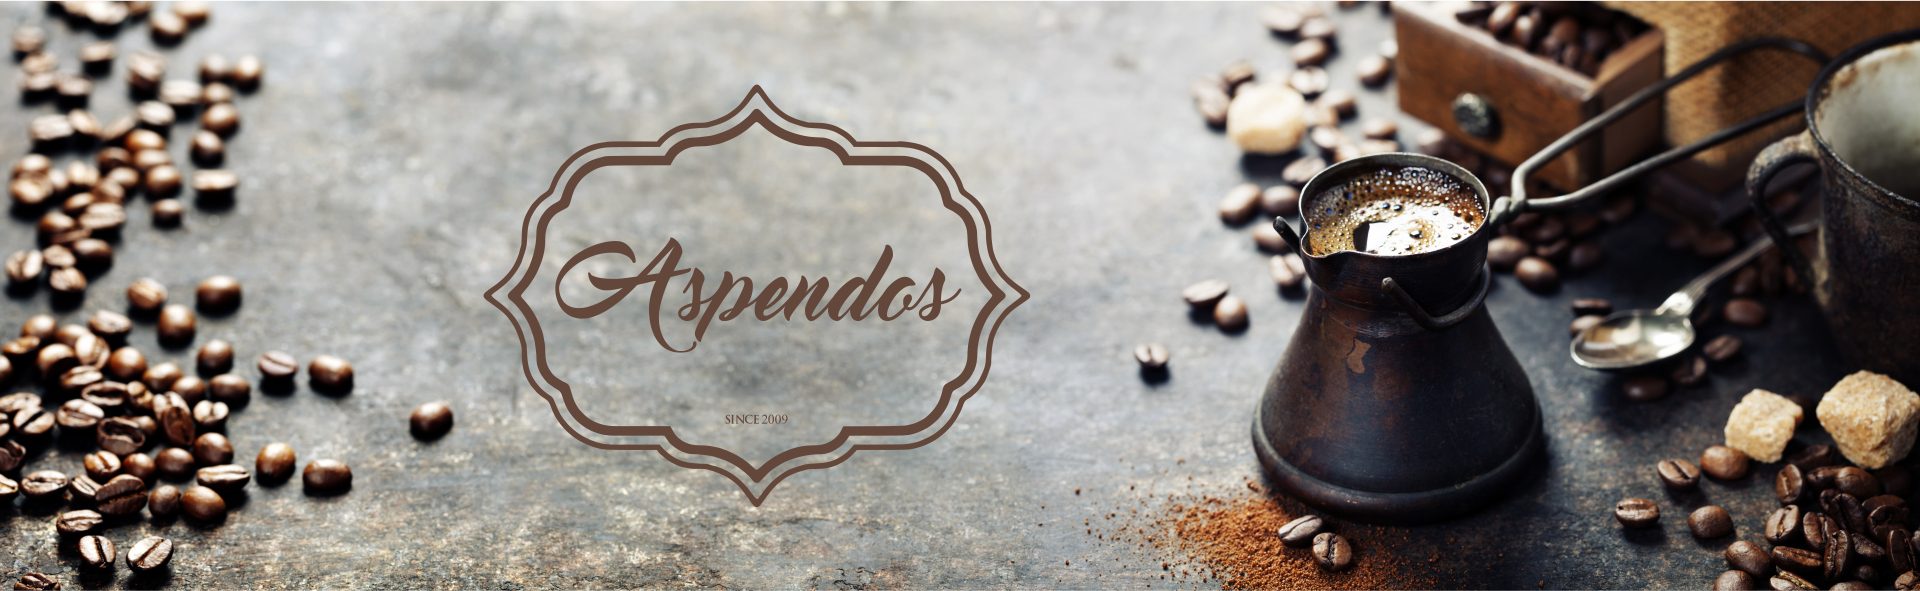 Aspendos Coffee